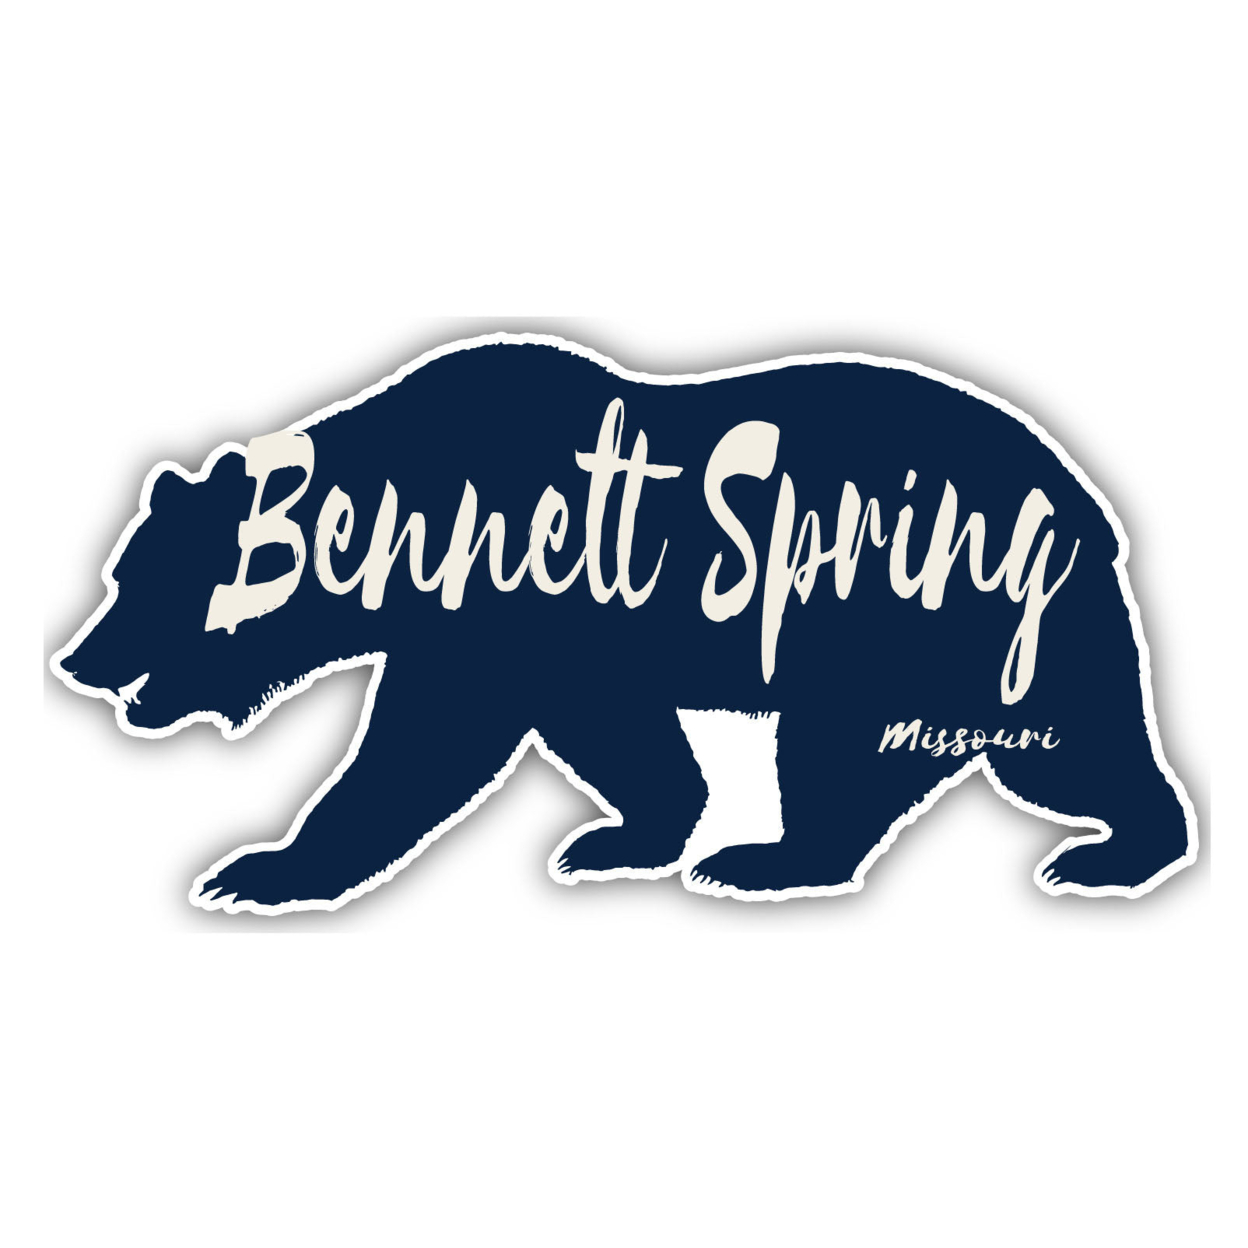 Bennett Spring Missouri Souvenir Decorative Stickers (Choose Theme And Size) - Single Unit, 10-Inch, Bear